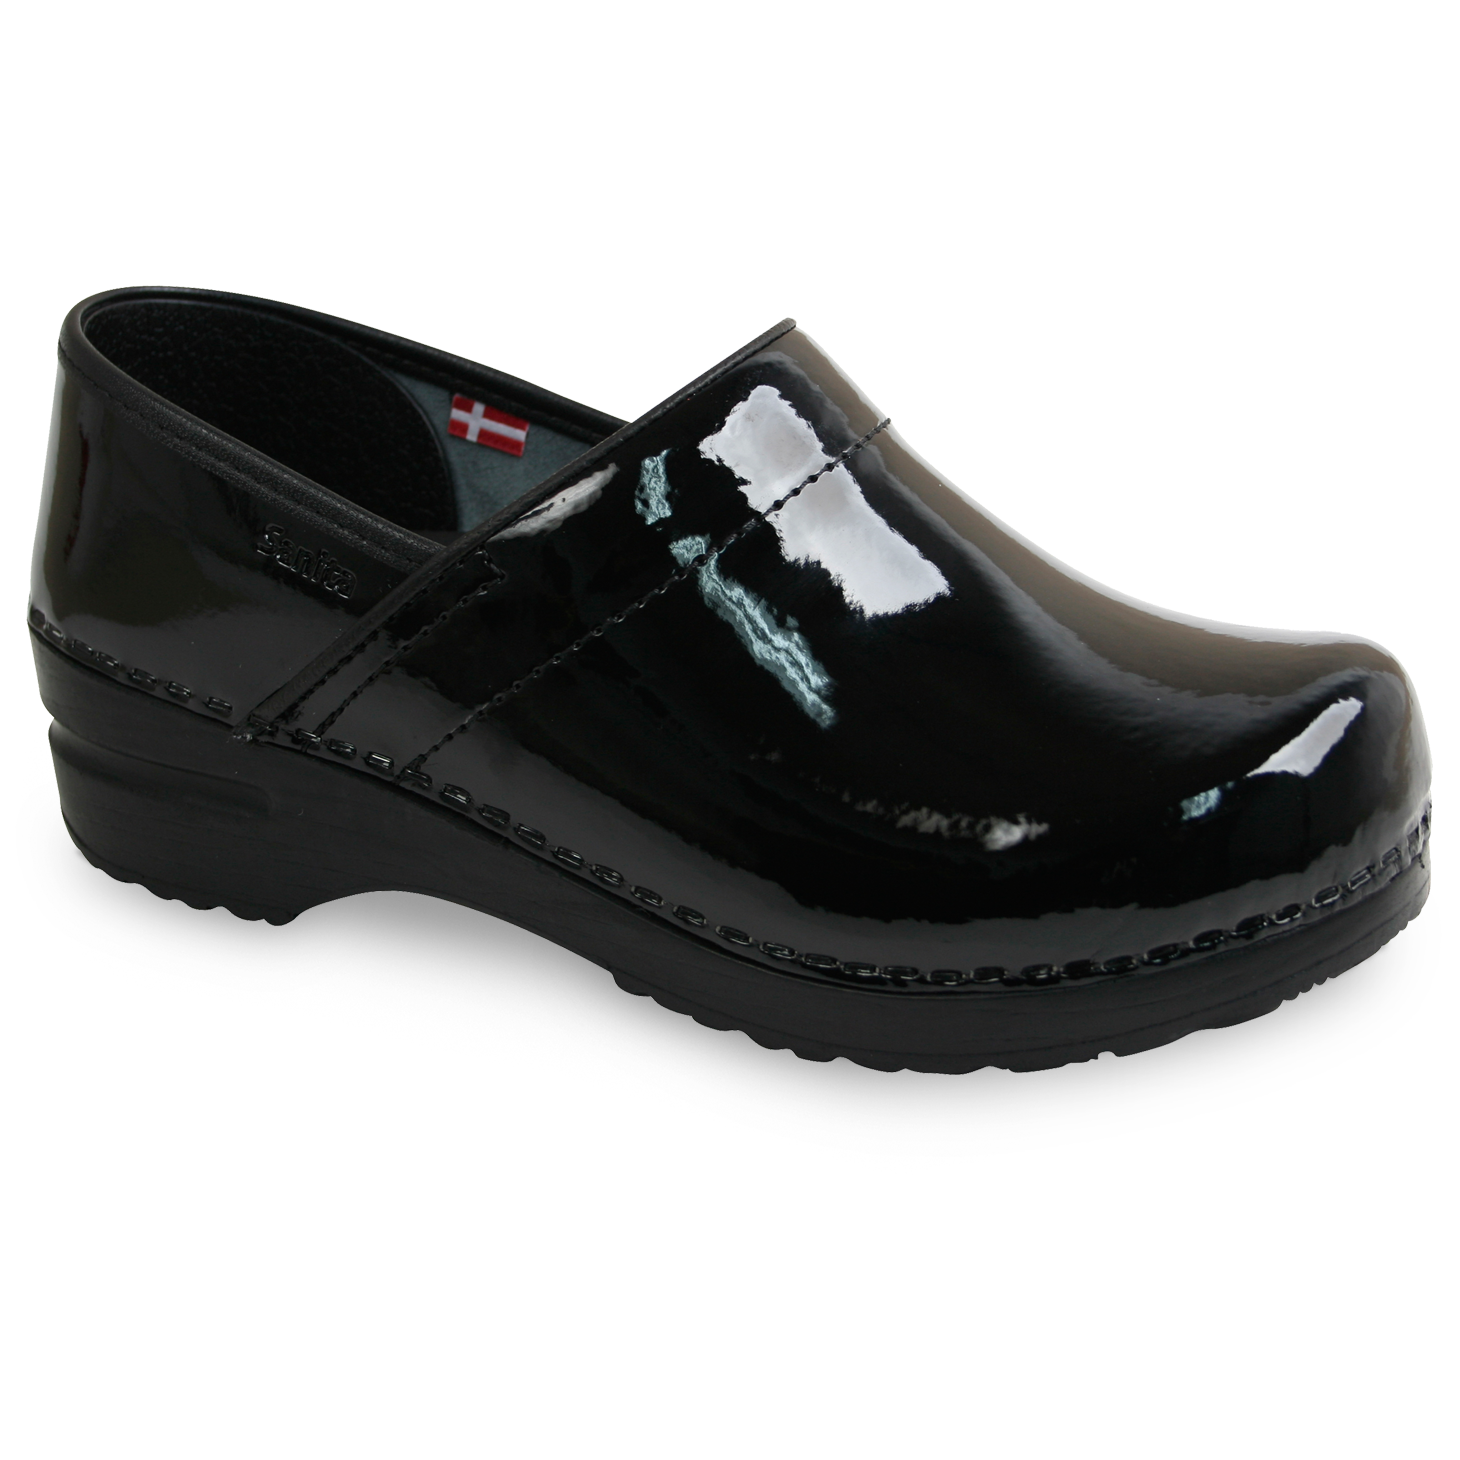 Sanita's Women's Clogs, Boots, & Sandals For Office/Home - Sanita